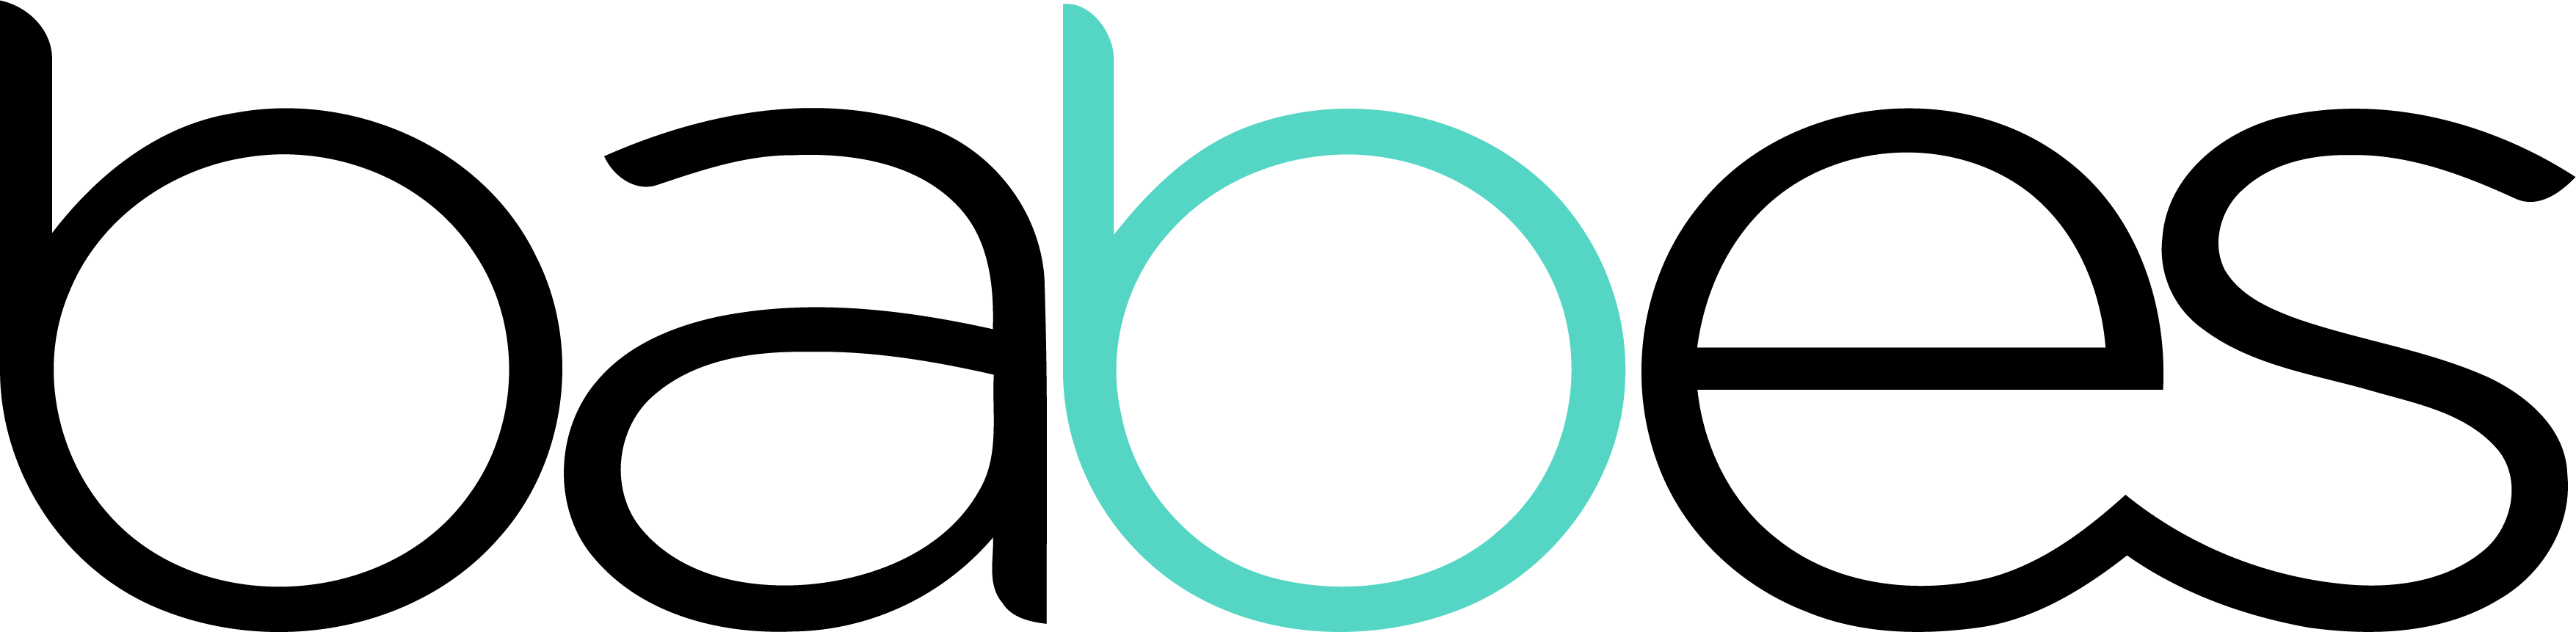 babes network logo